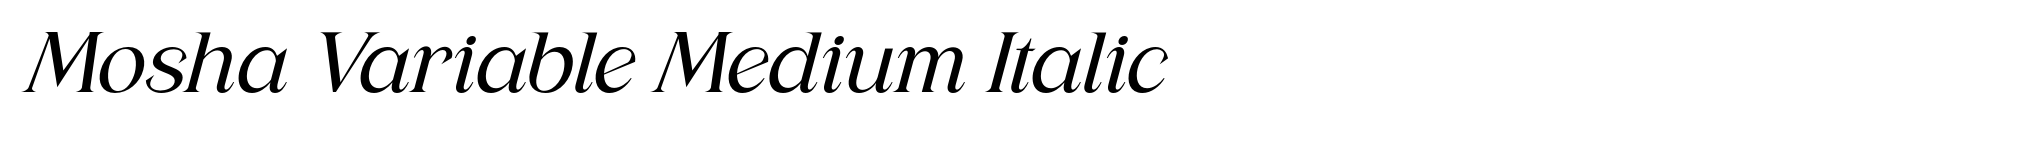 Mosha Variable Medium Italic image